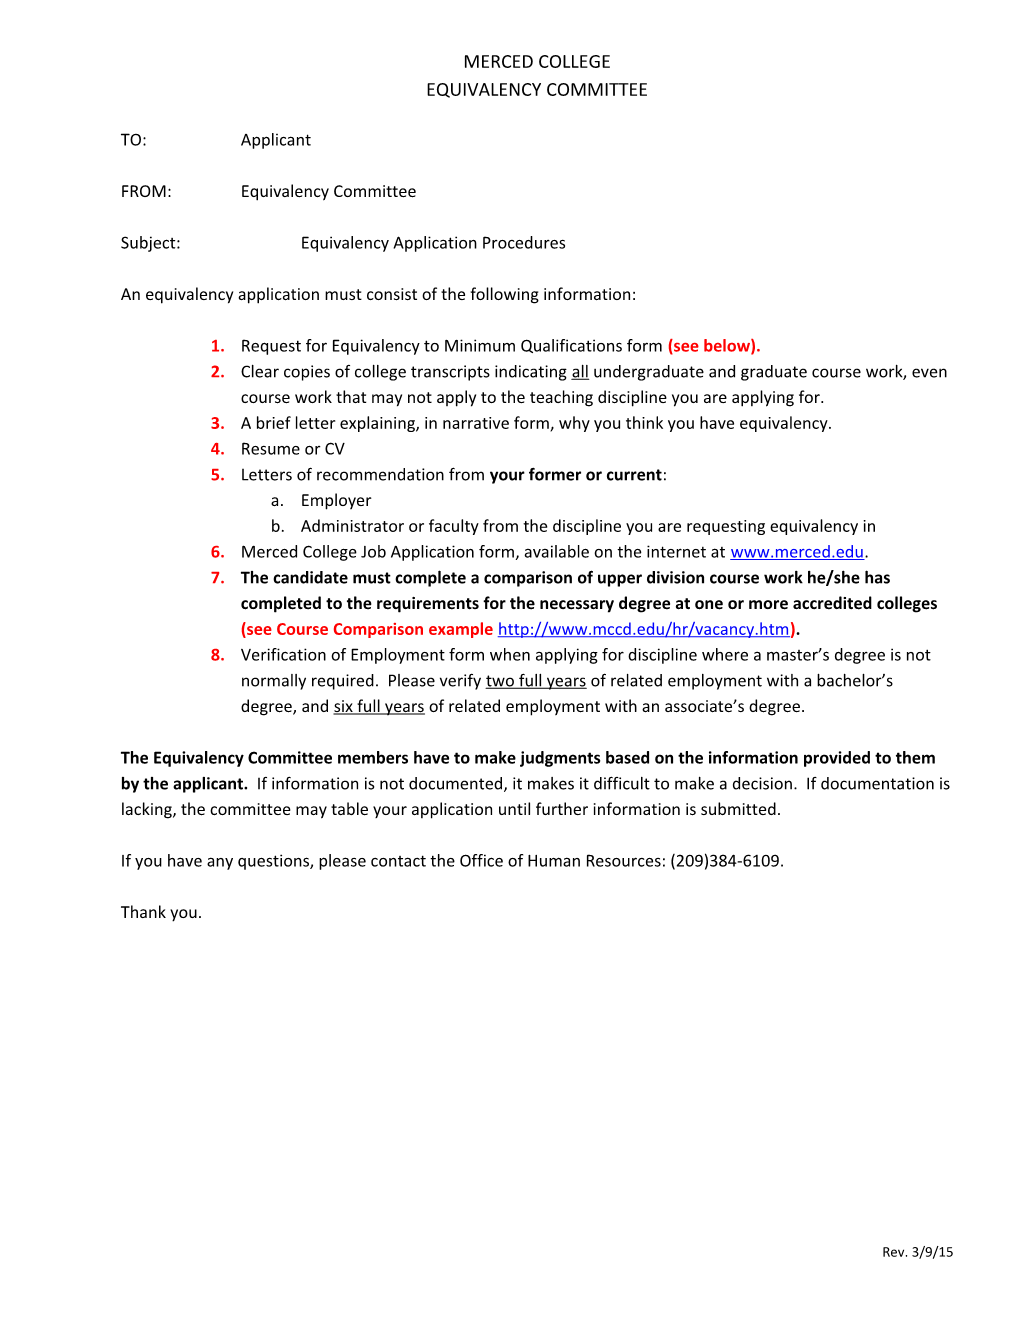 Subject:Equivalency Application Procedures